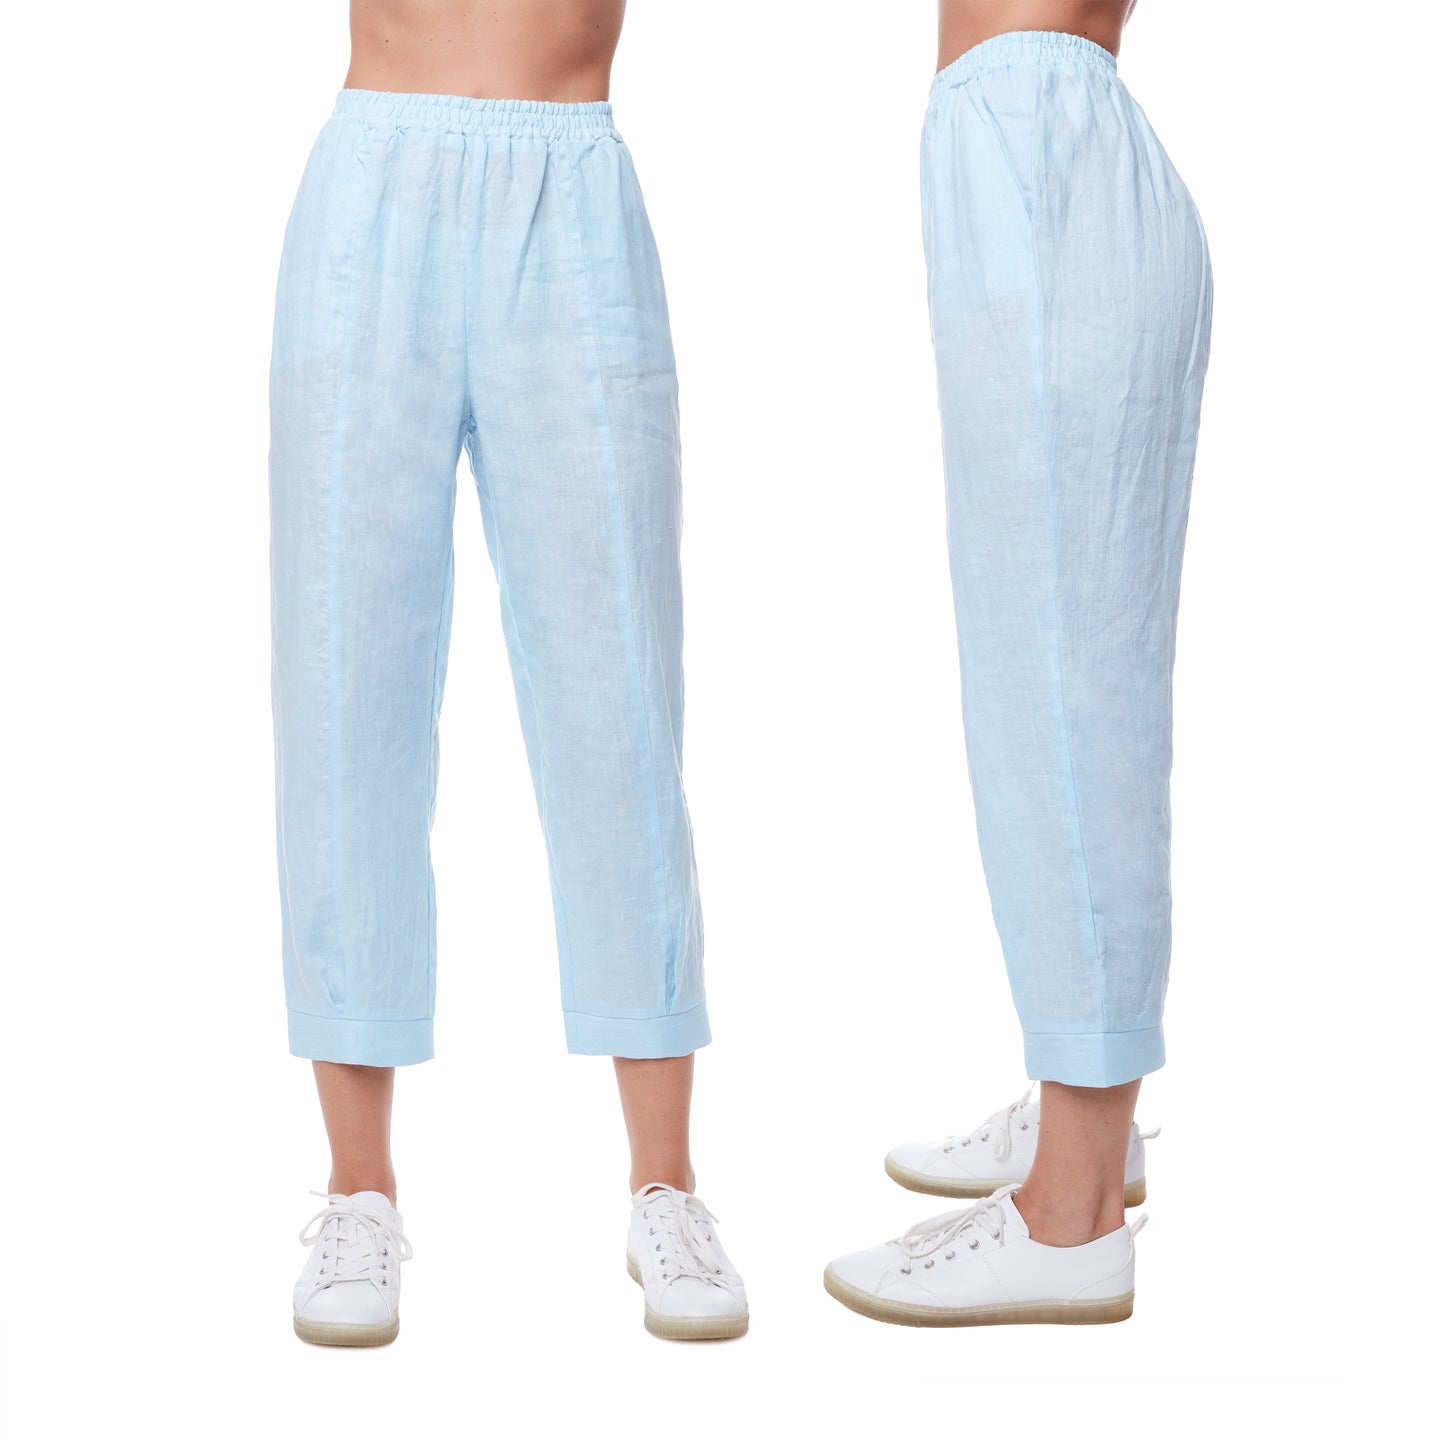 Basics collection elastic waist crop pants